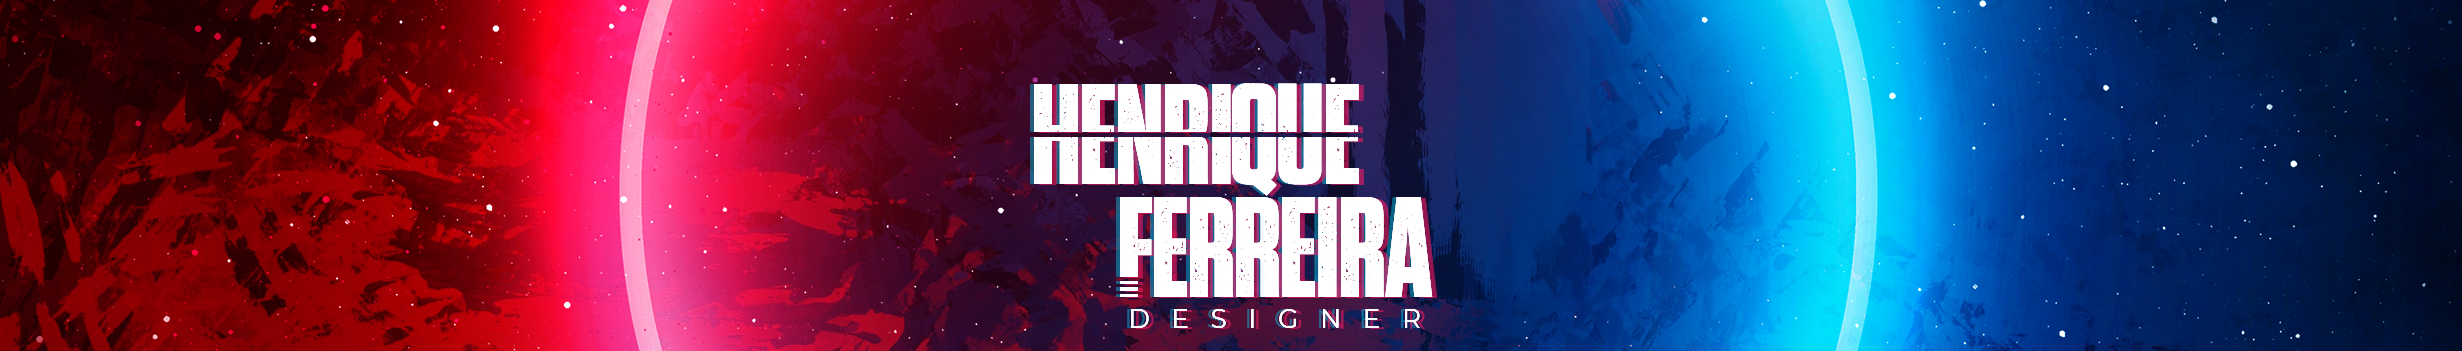 Henrique Ferreira's profile banner